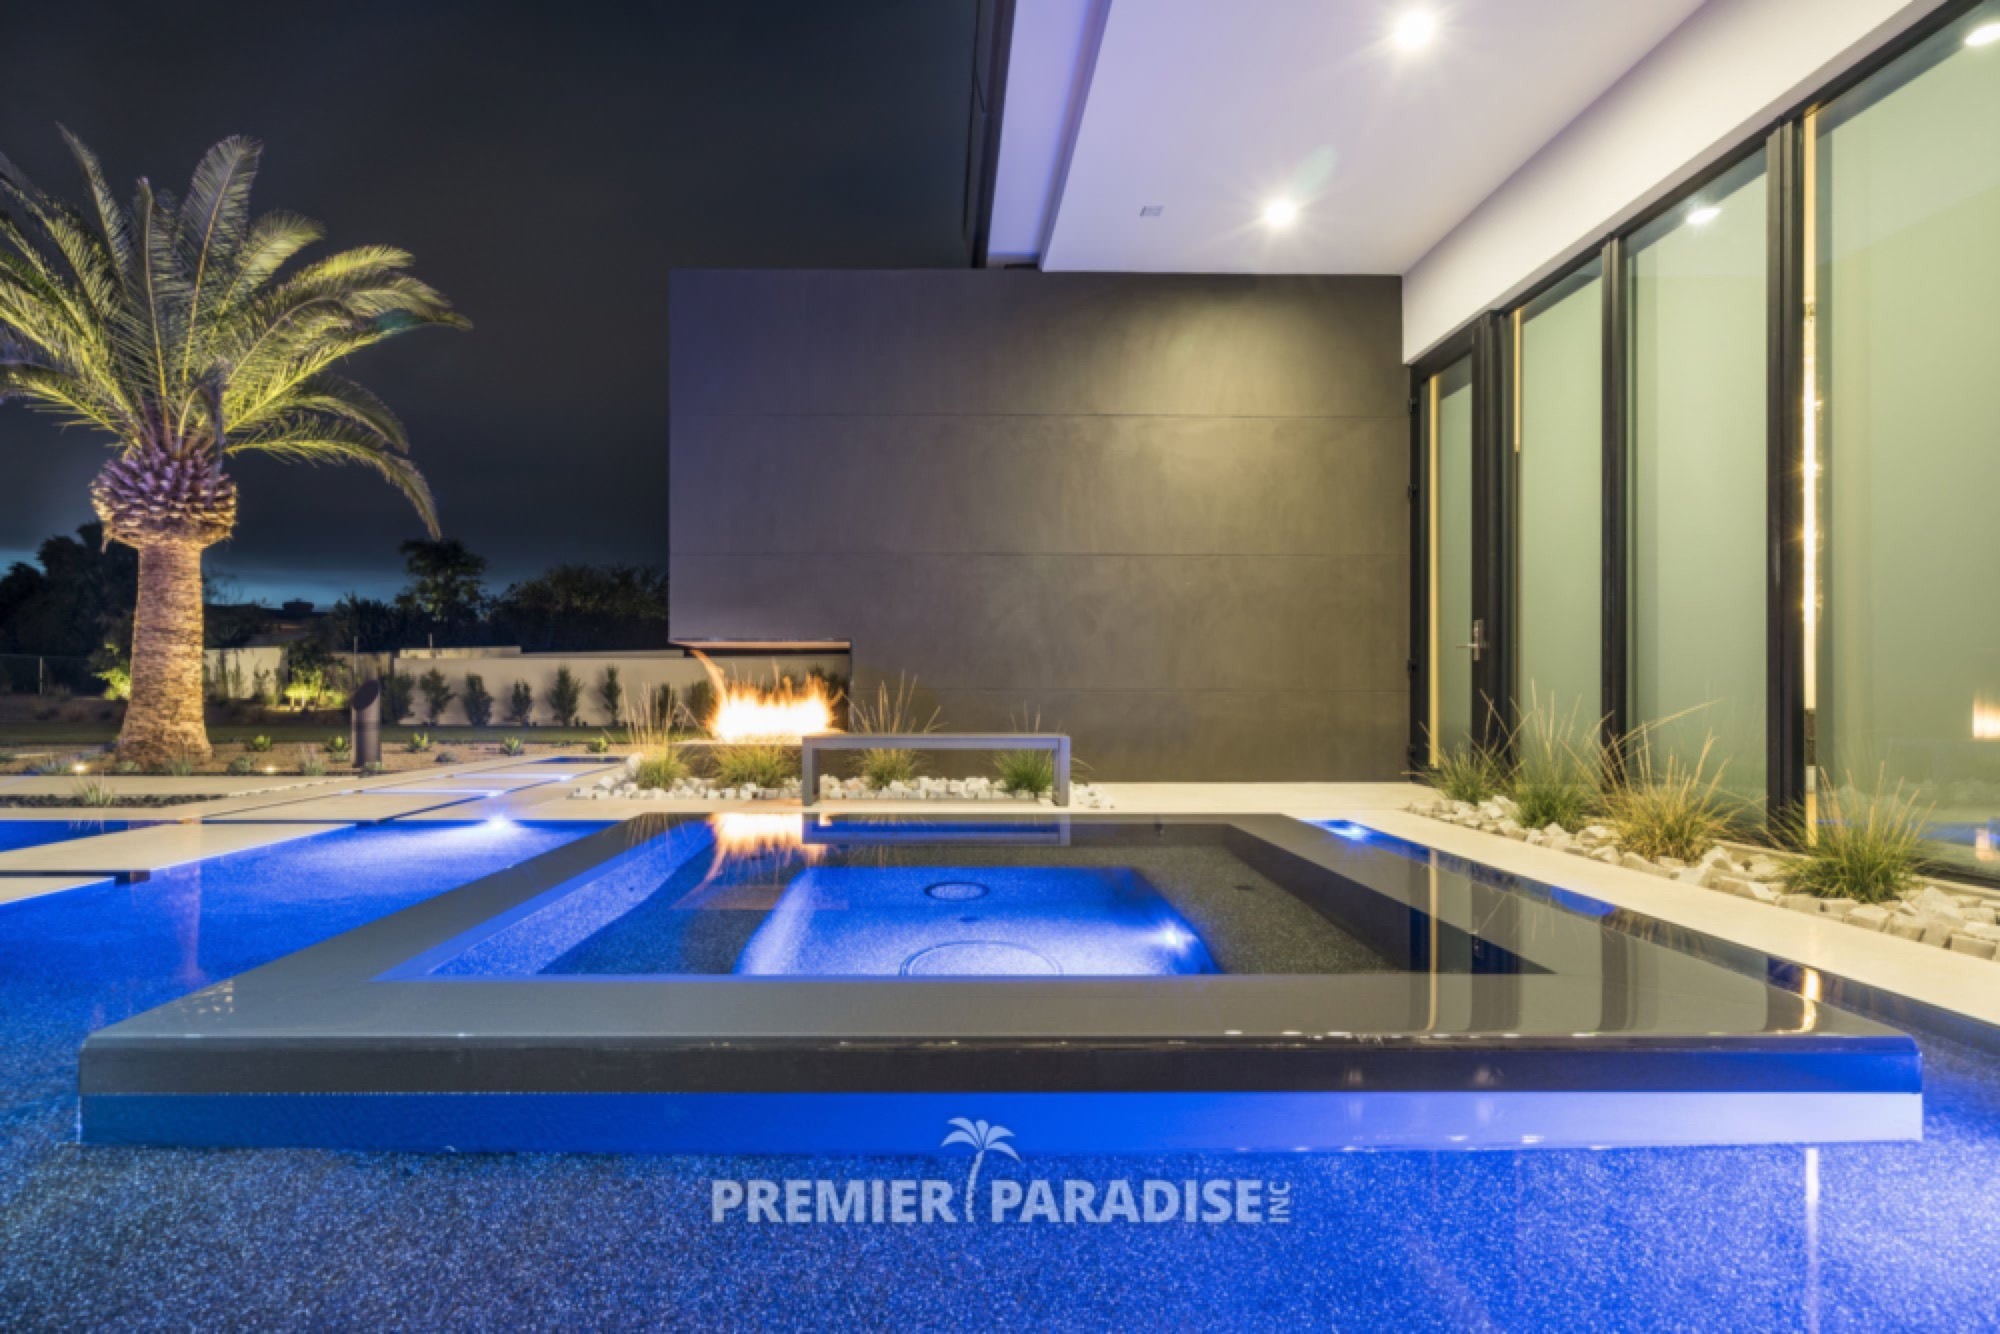 infinity edge pool design custom pool builder arizona premier paradise inc 9 watermarked 1000x667